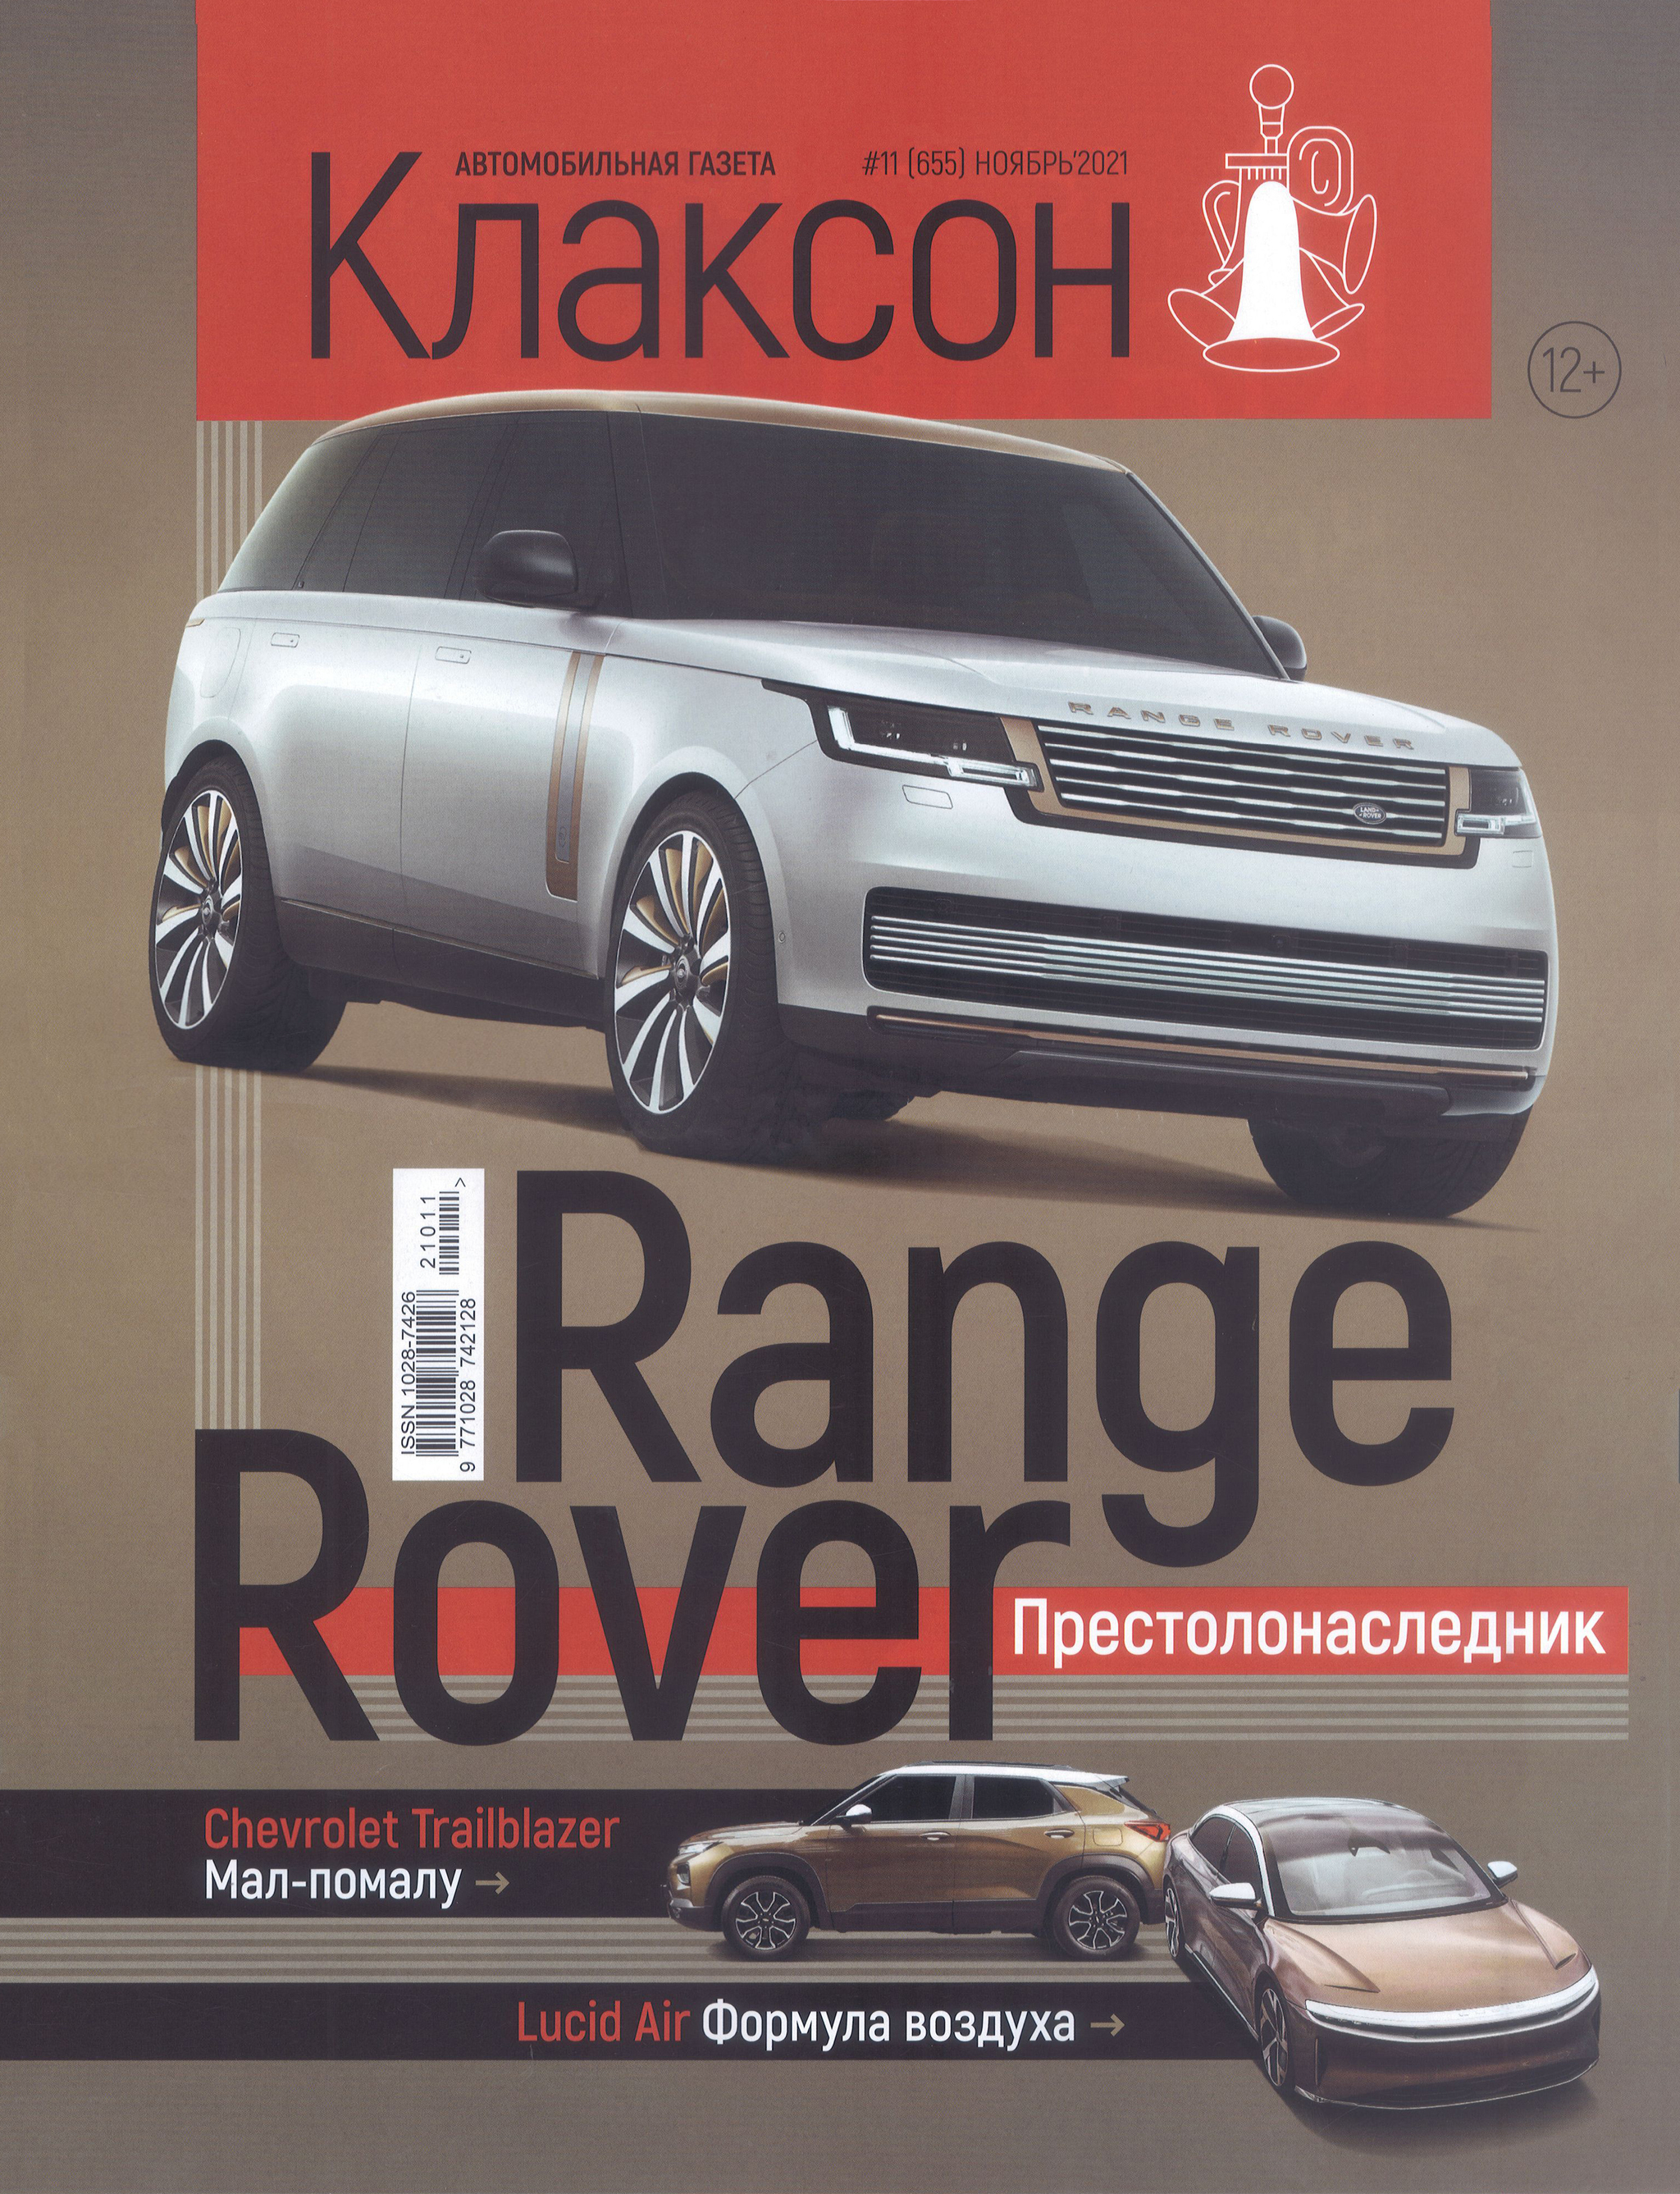 Klaxon newspaper. Year 2021 - Klaxon, Magazine, Newspapers, Auto, Longpost